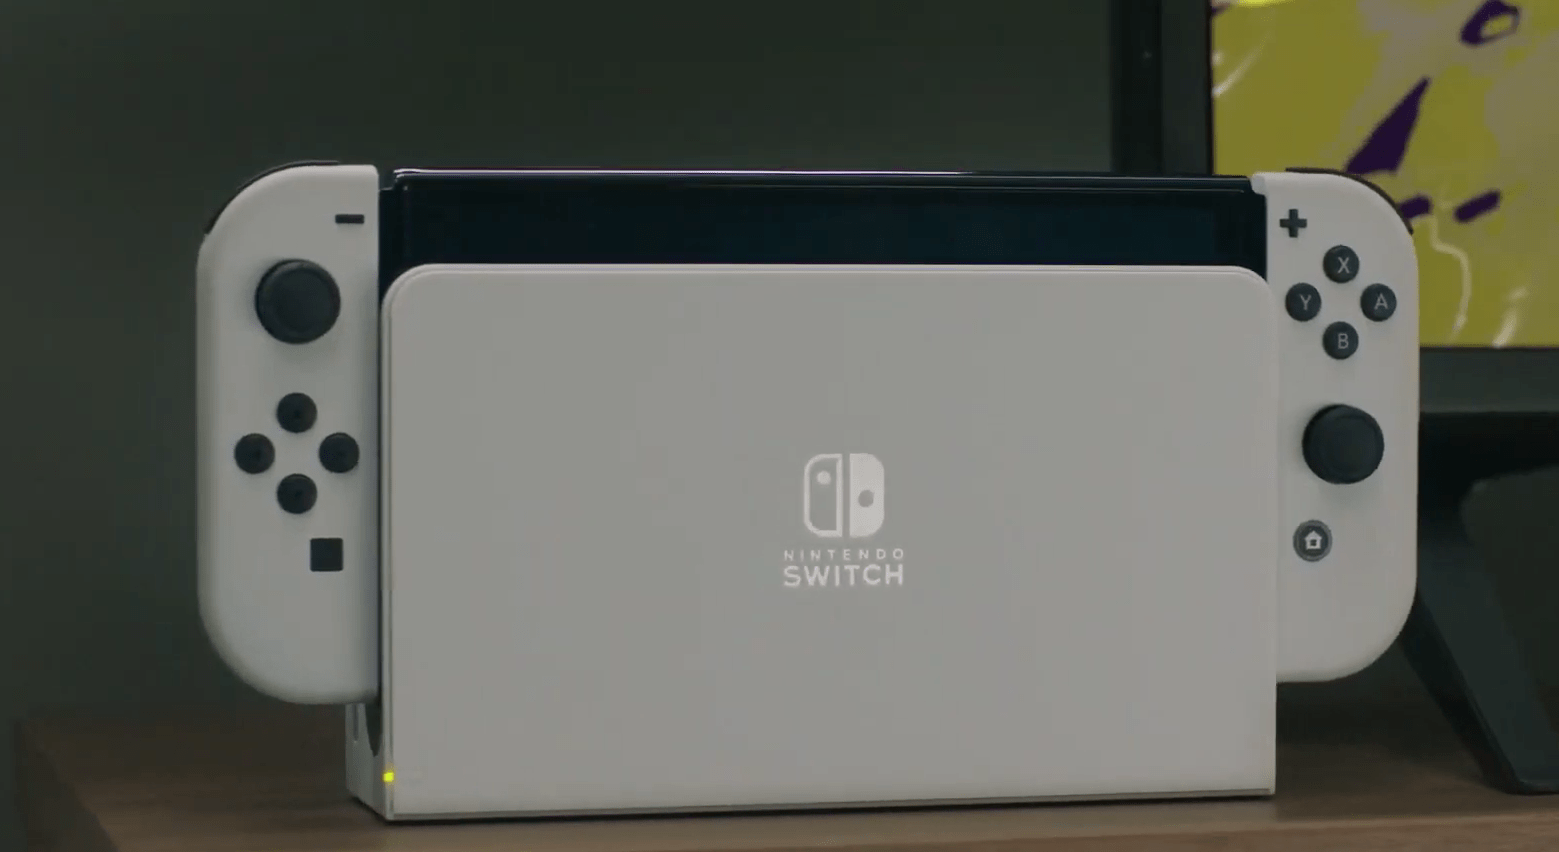 Nintendo Switch VS Steam Deck